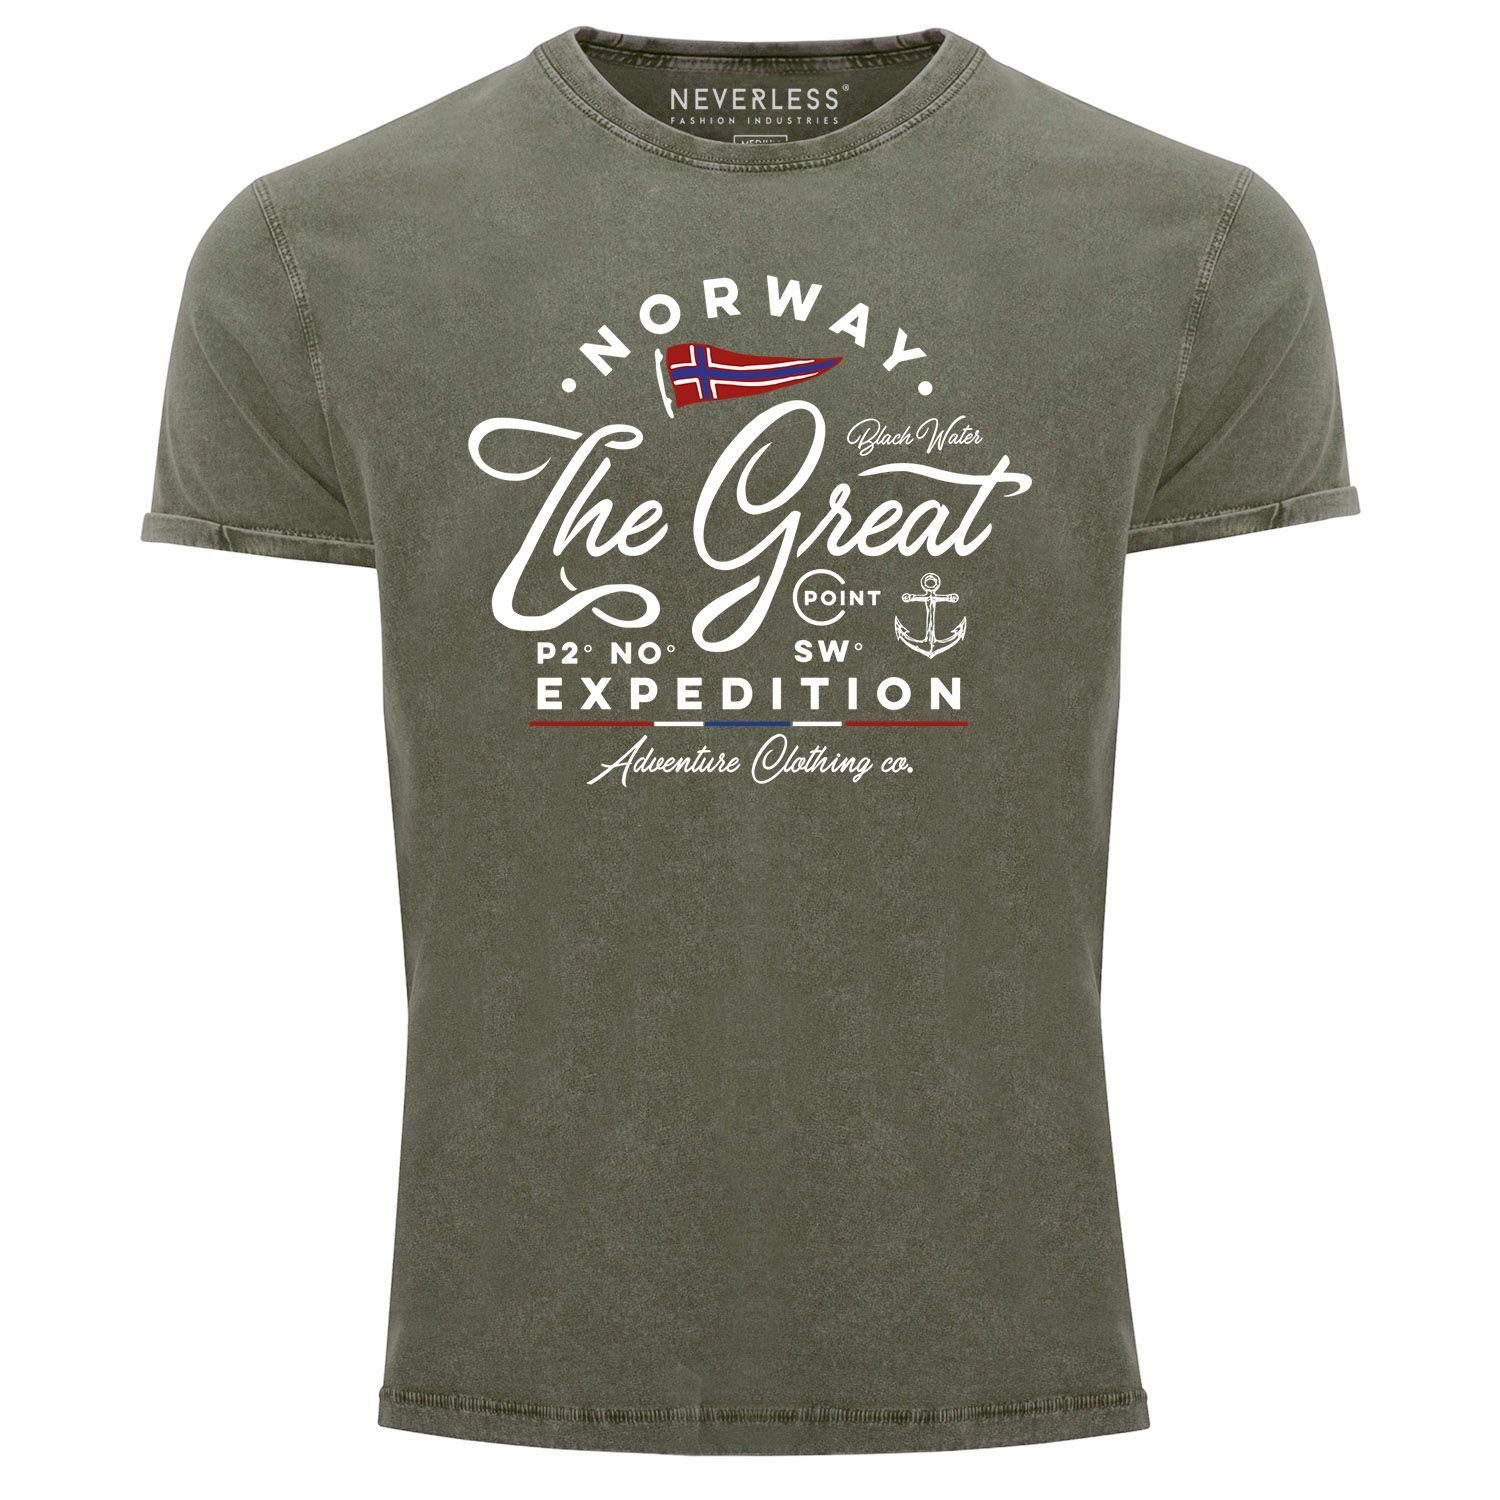 Neverless Print-Shirt Herren Vintage Shirt Norwegen The Great Expedition Outdoor Adventure Printshirt T-Shirt Aufdruck Used Look Neverless® mit Print oliv | T-Shirts